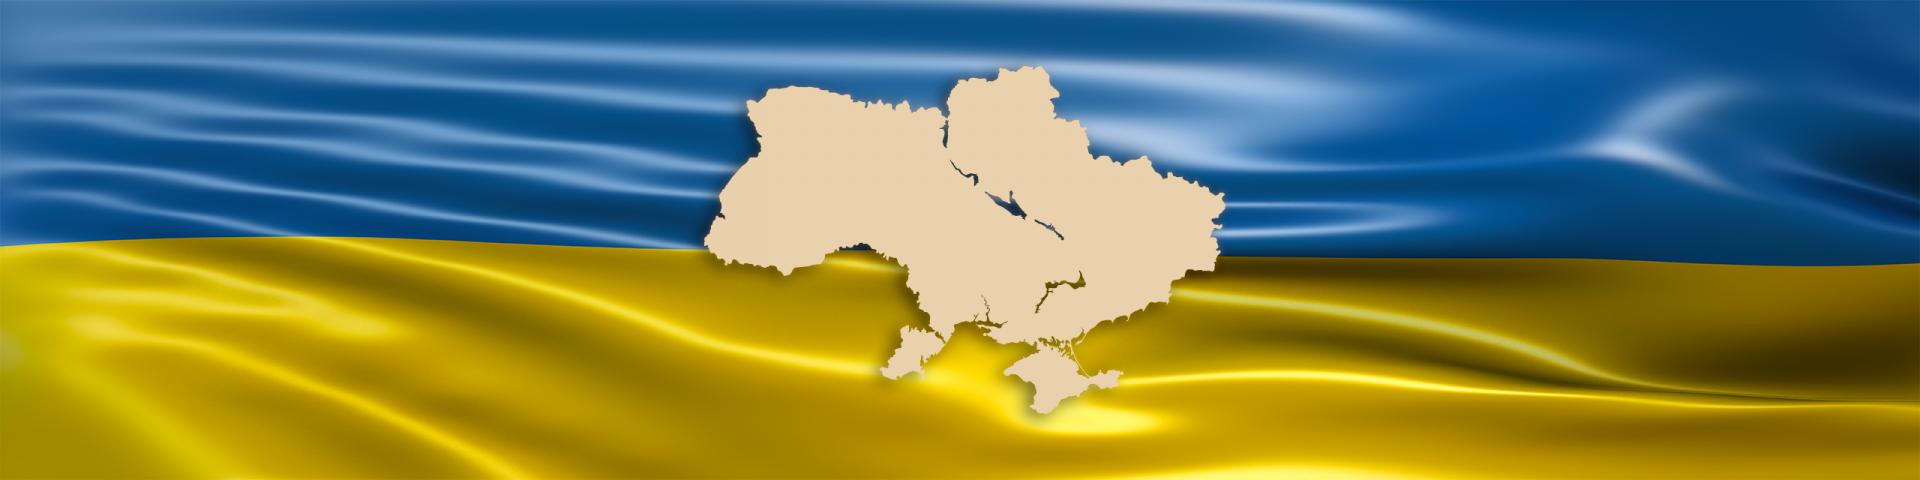 https://www.defense.gouv.fr/sites/default/files/styles/homepage_desktop/public/ministere-armees/Bandeau-Ukraine-v2.jpg?h=bc8a8ef5&itok=nBsi5tQY